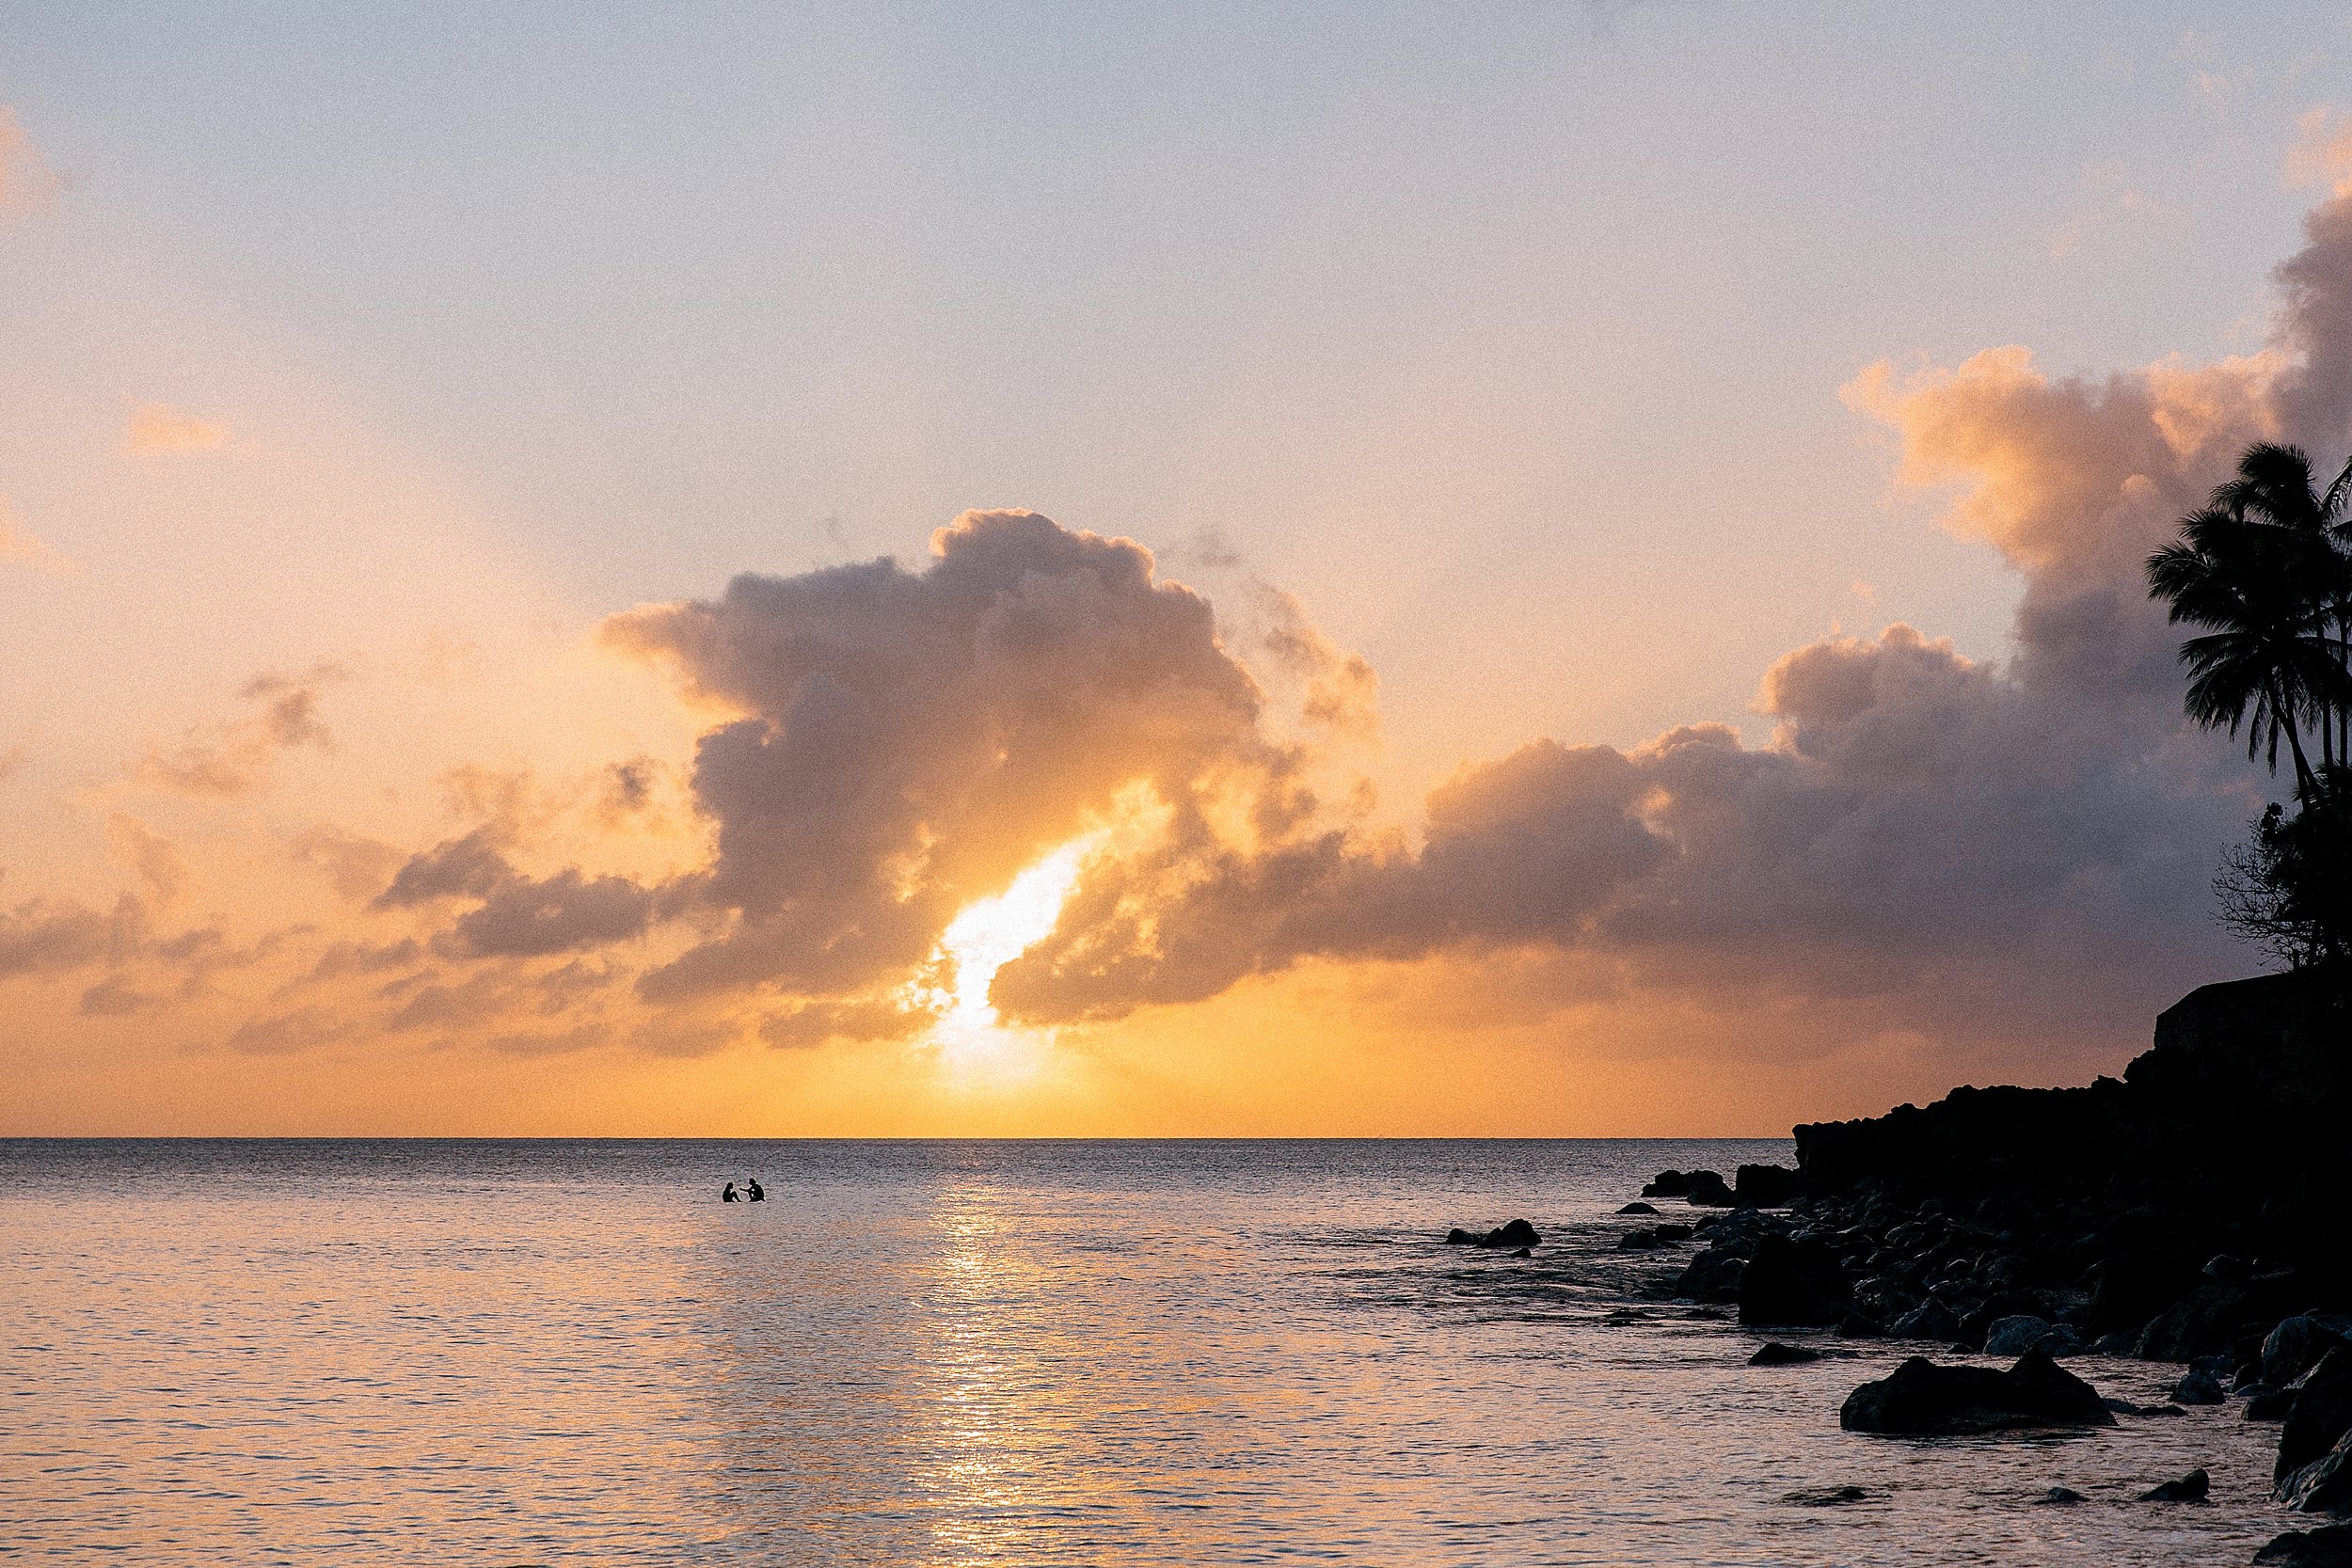 Sunset Proposal at Waimea Bay on Oahu's North Shore